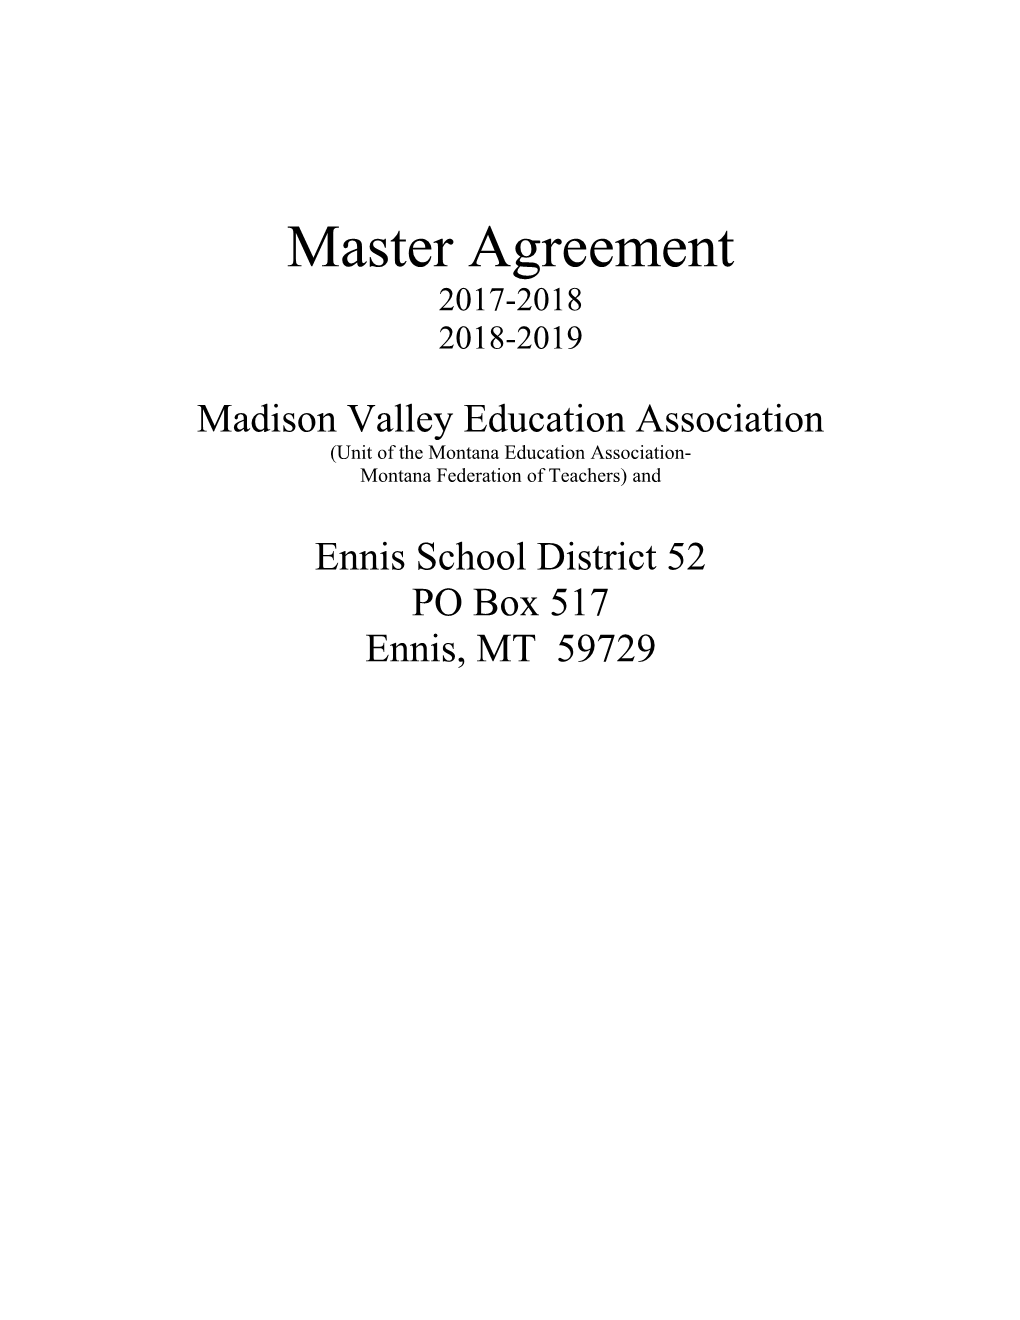 Madison Valley Education Association